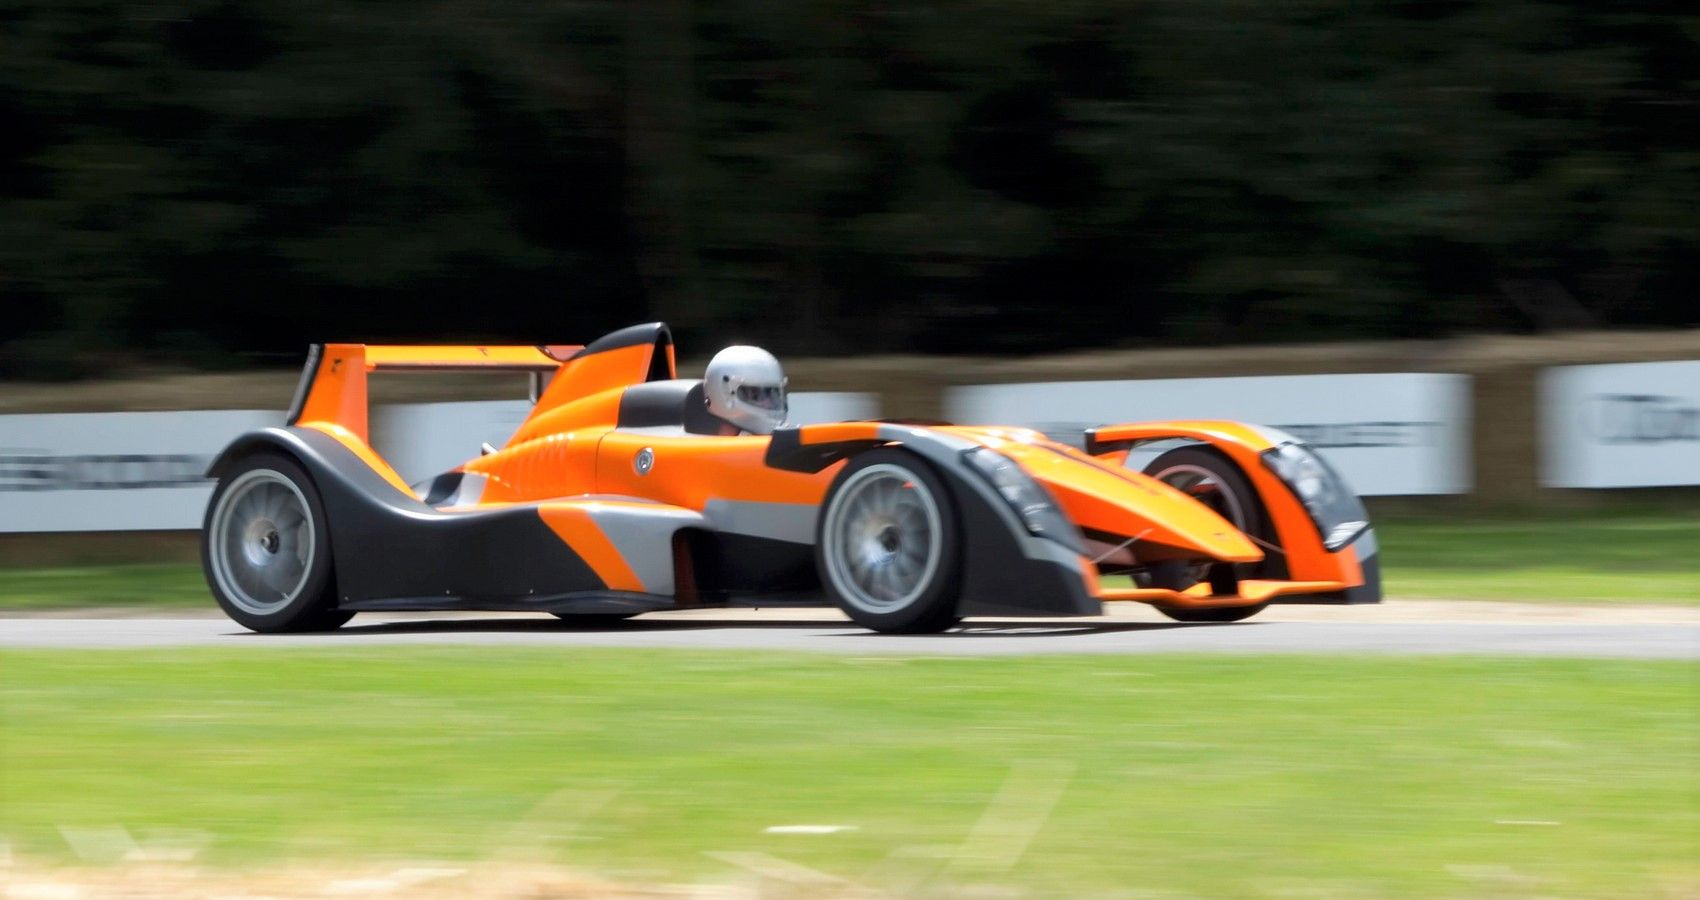 Caparo T1 - Side View - Orange over black - Test Session